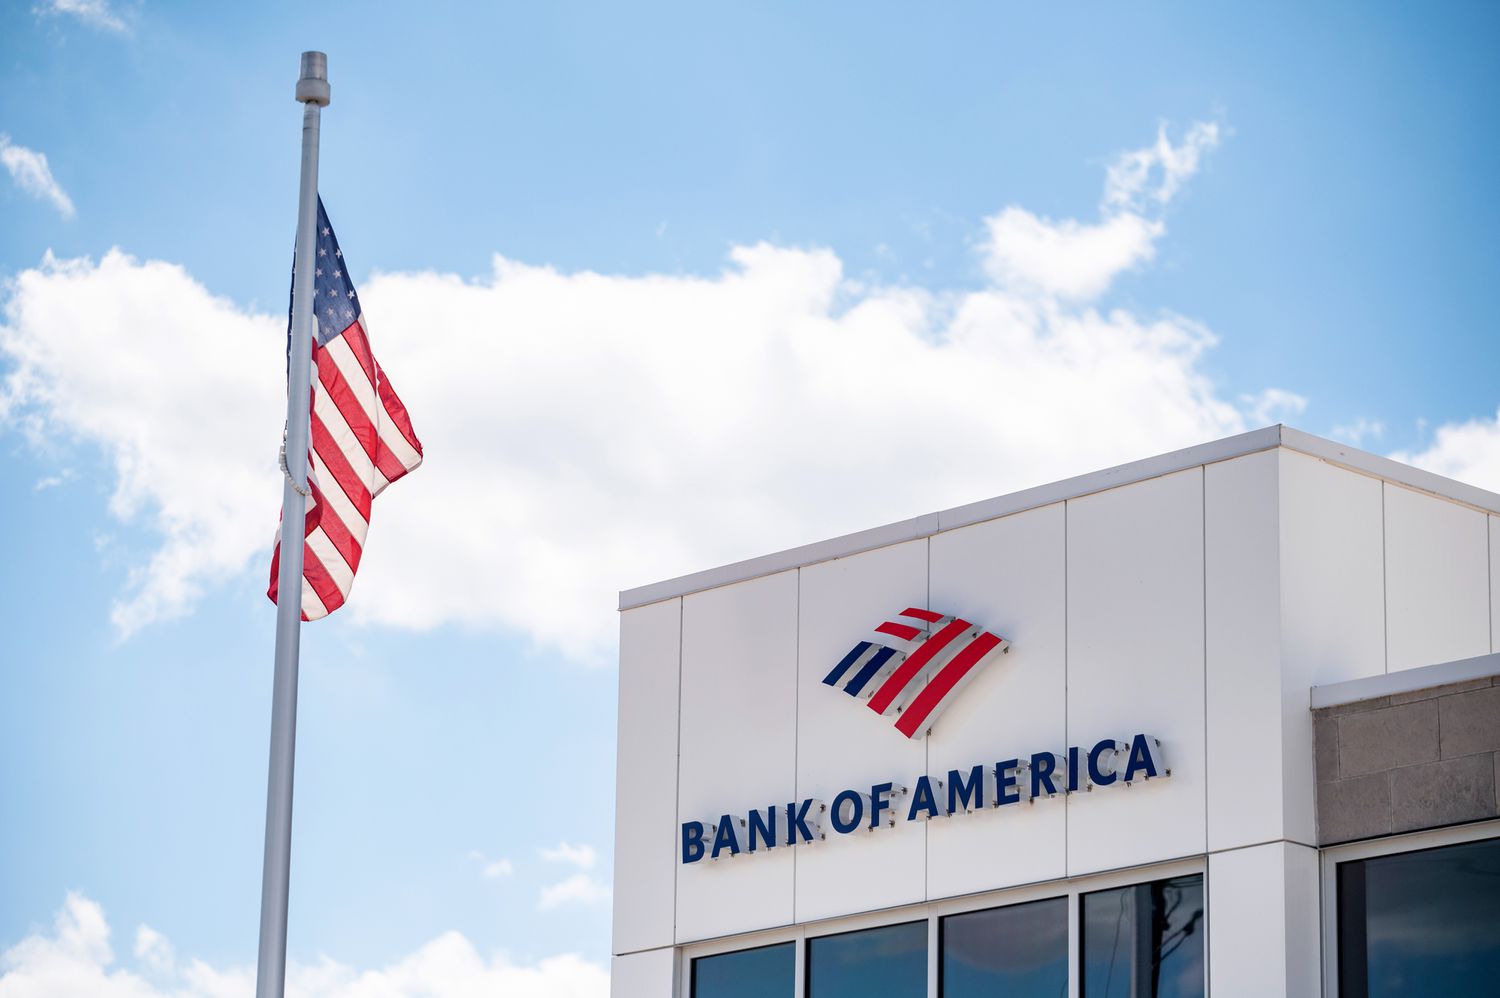 Bank of america